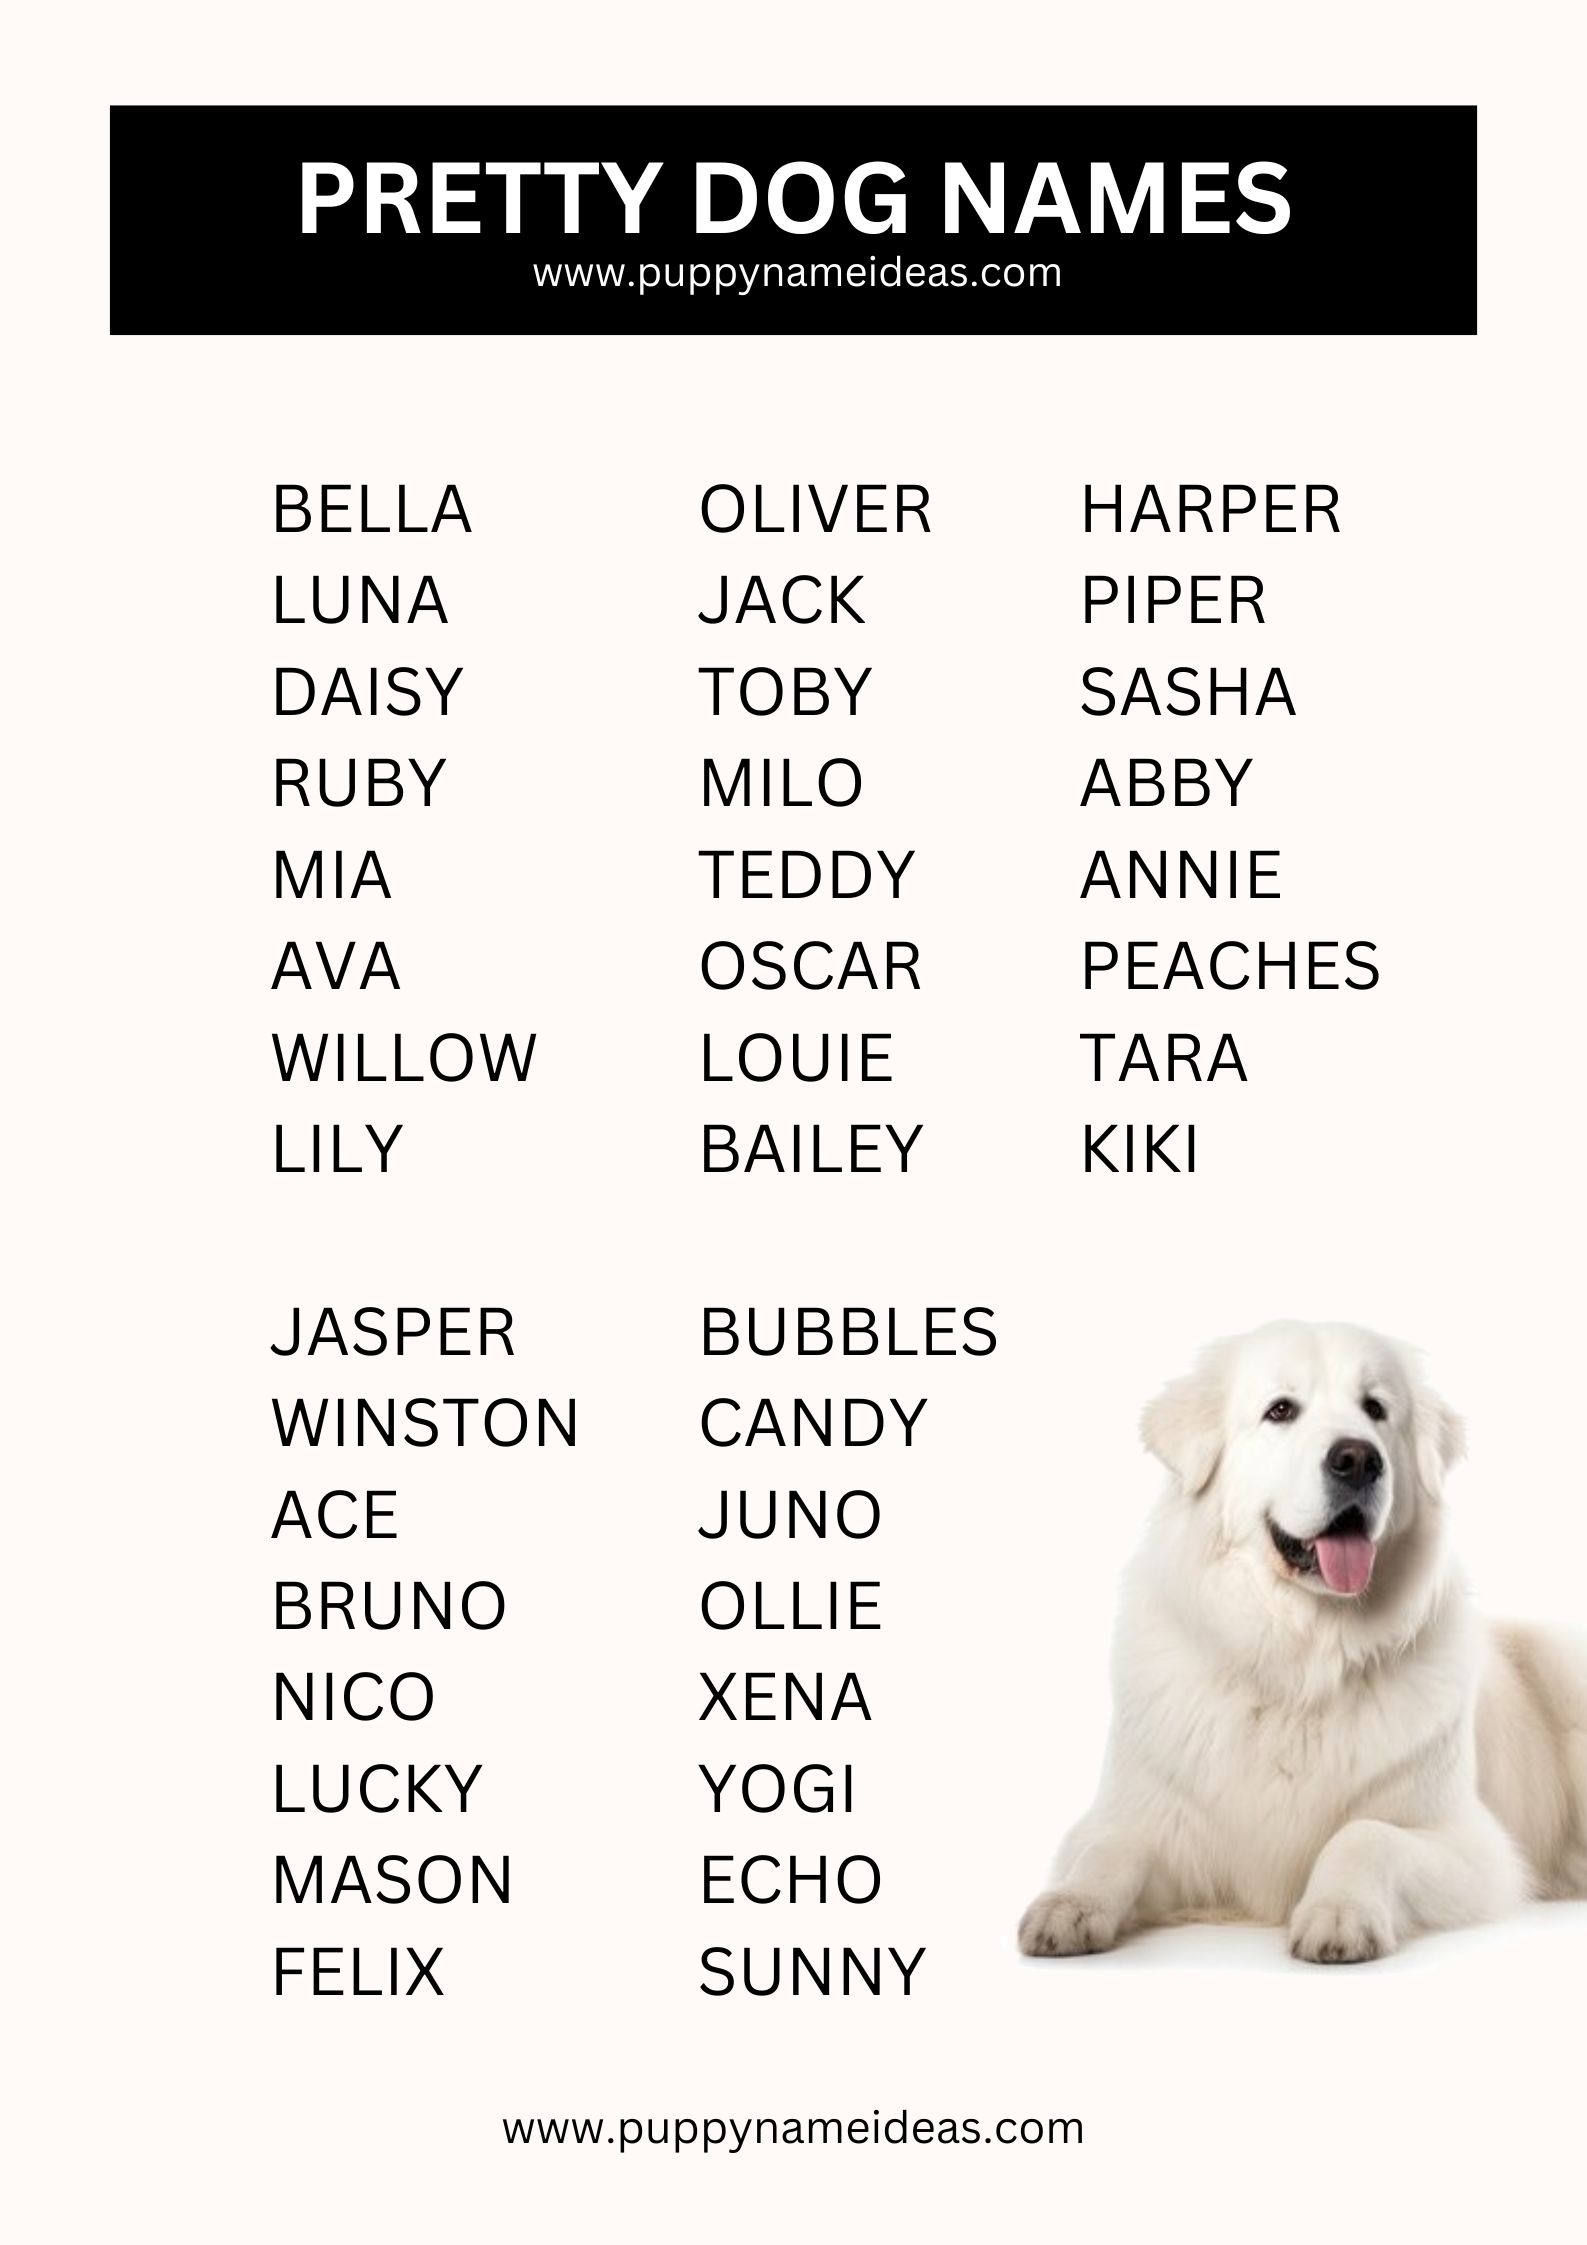 list of pretty dog names